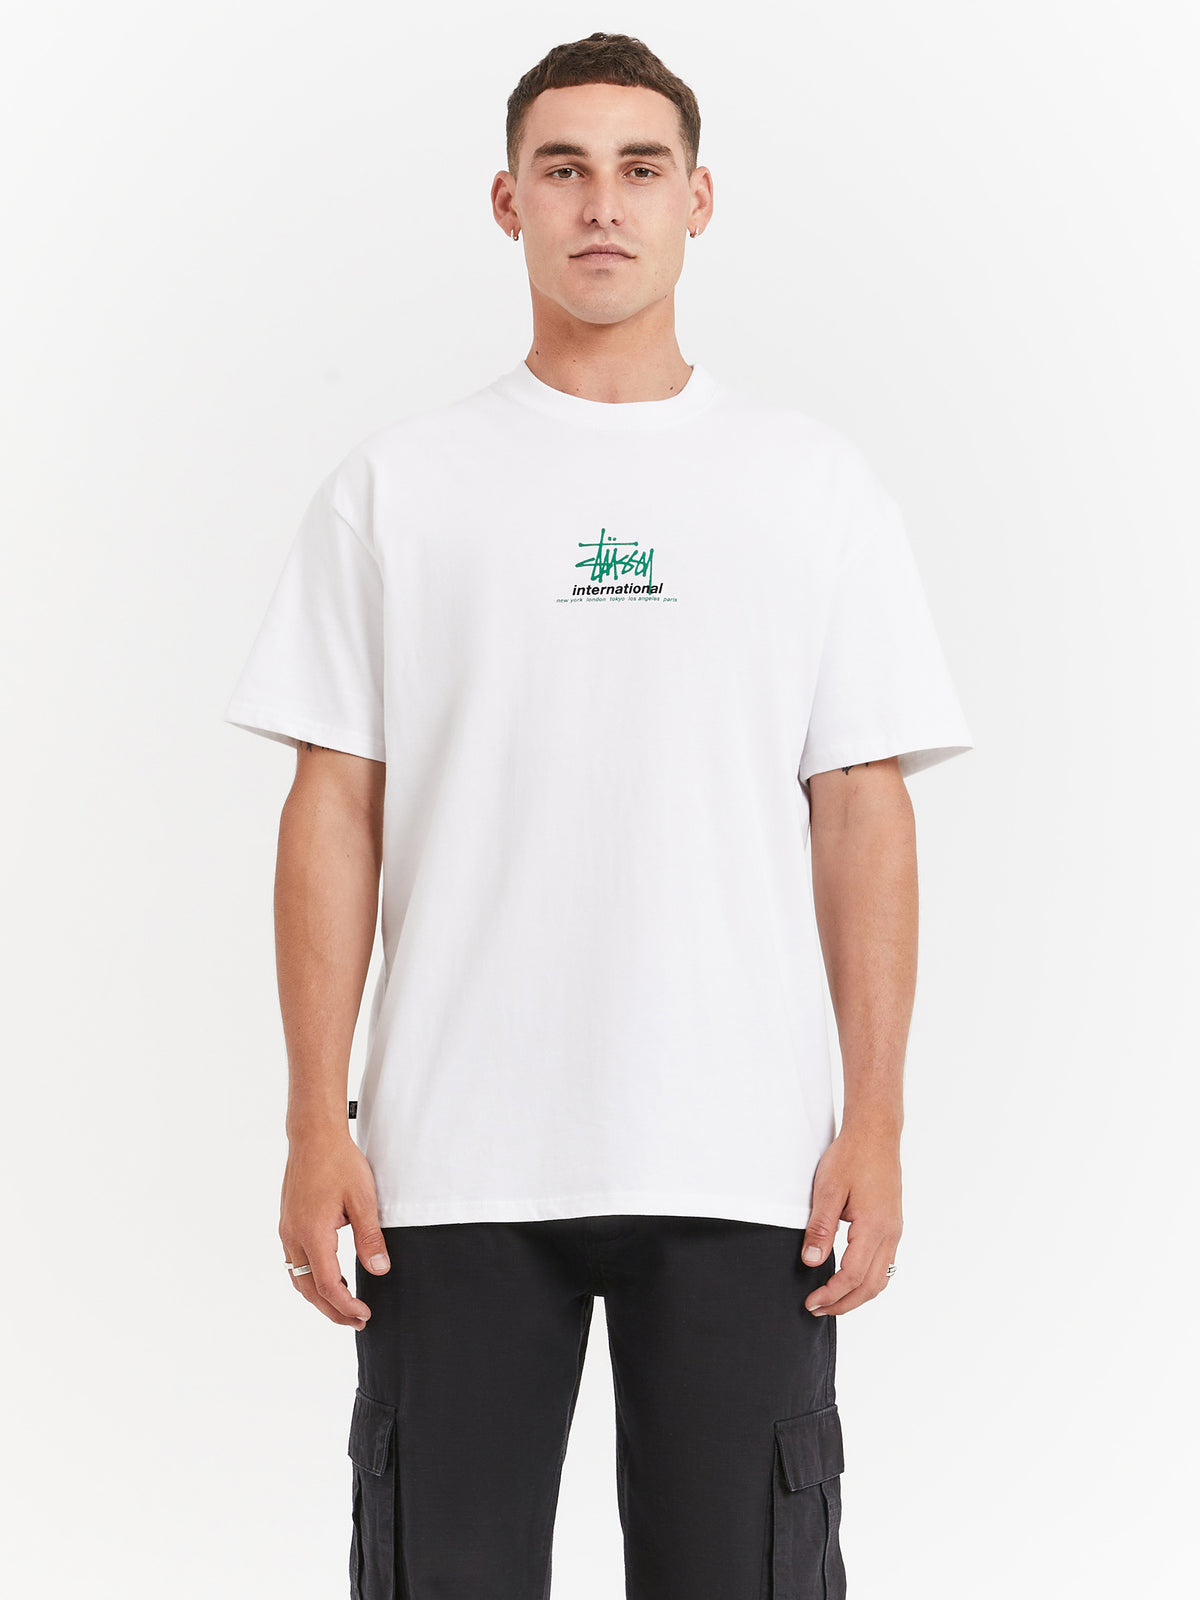 International Heavyweight Short Sleeve T-Shirt in White